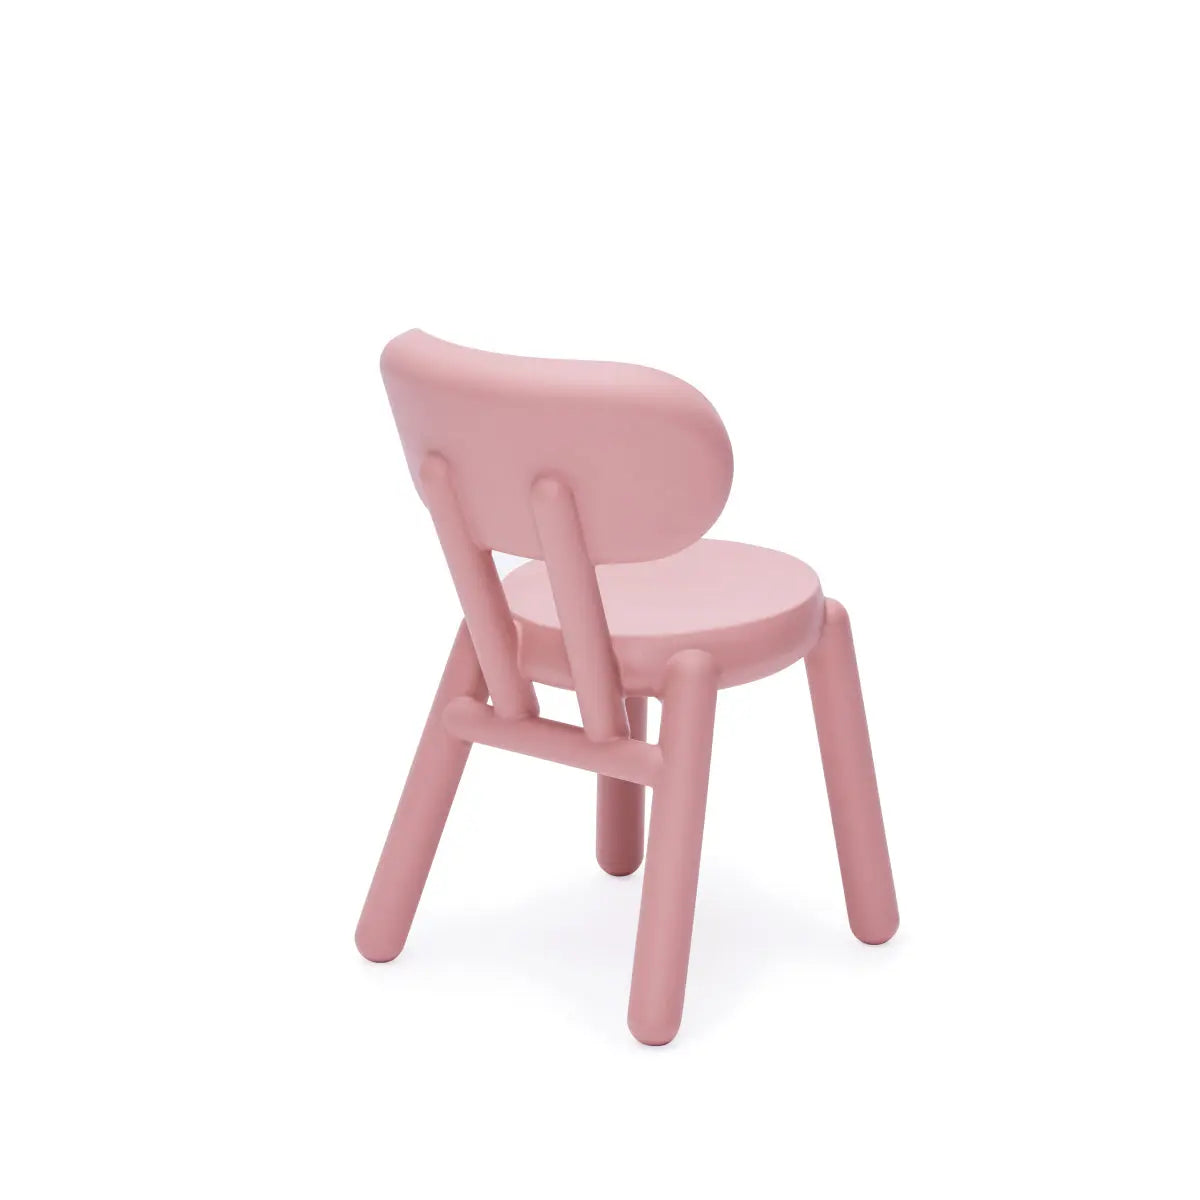 Kaboom accent chair pink Desert River Rentals